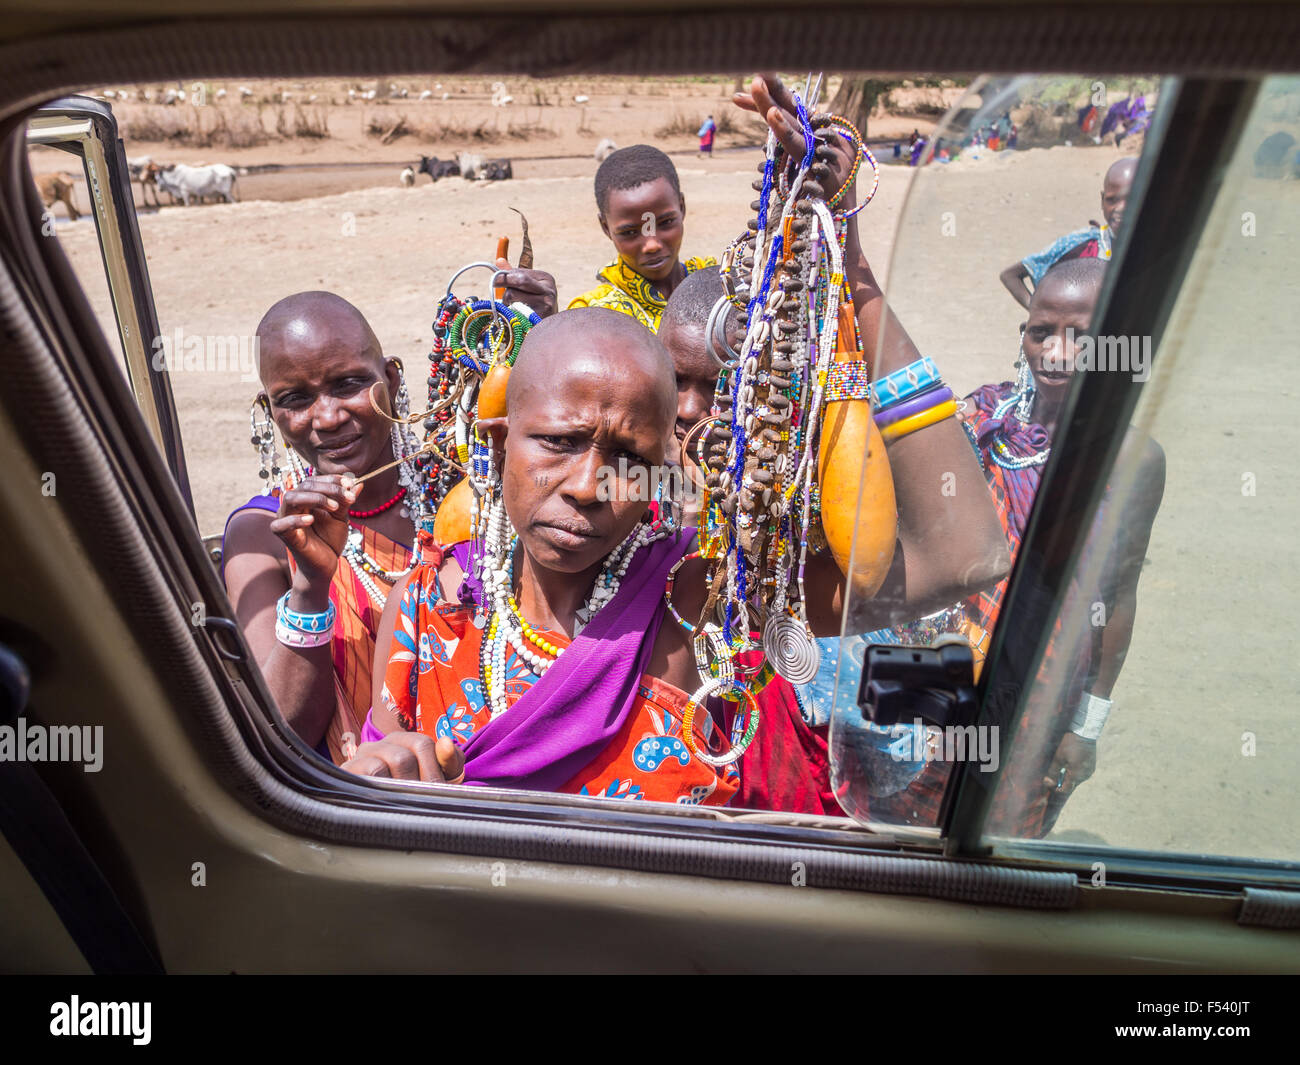 Maasai women offering souvenirs to the tourists through a car window in Arusha region, Tanzania, Africa. Stock Photo